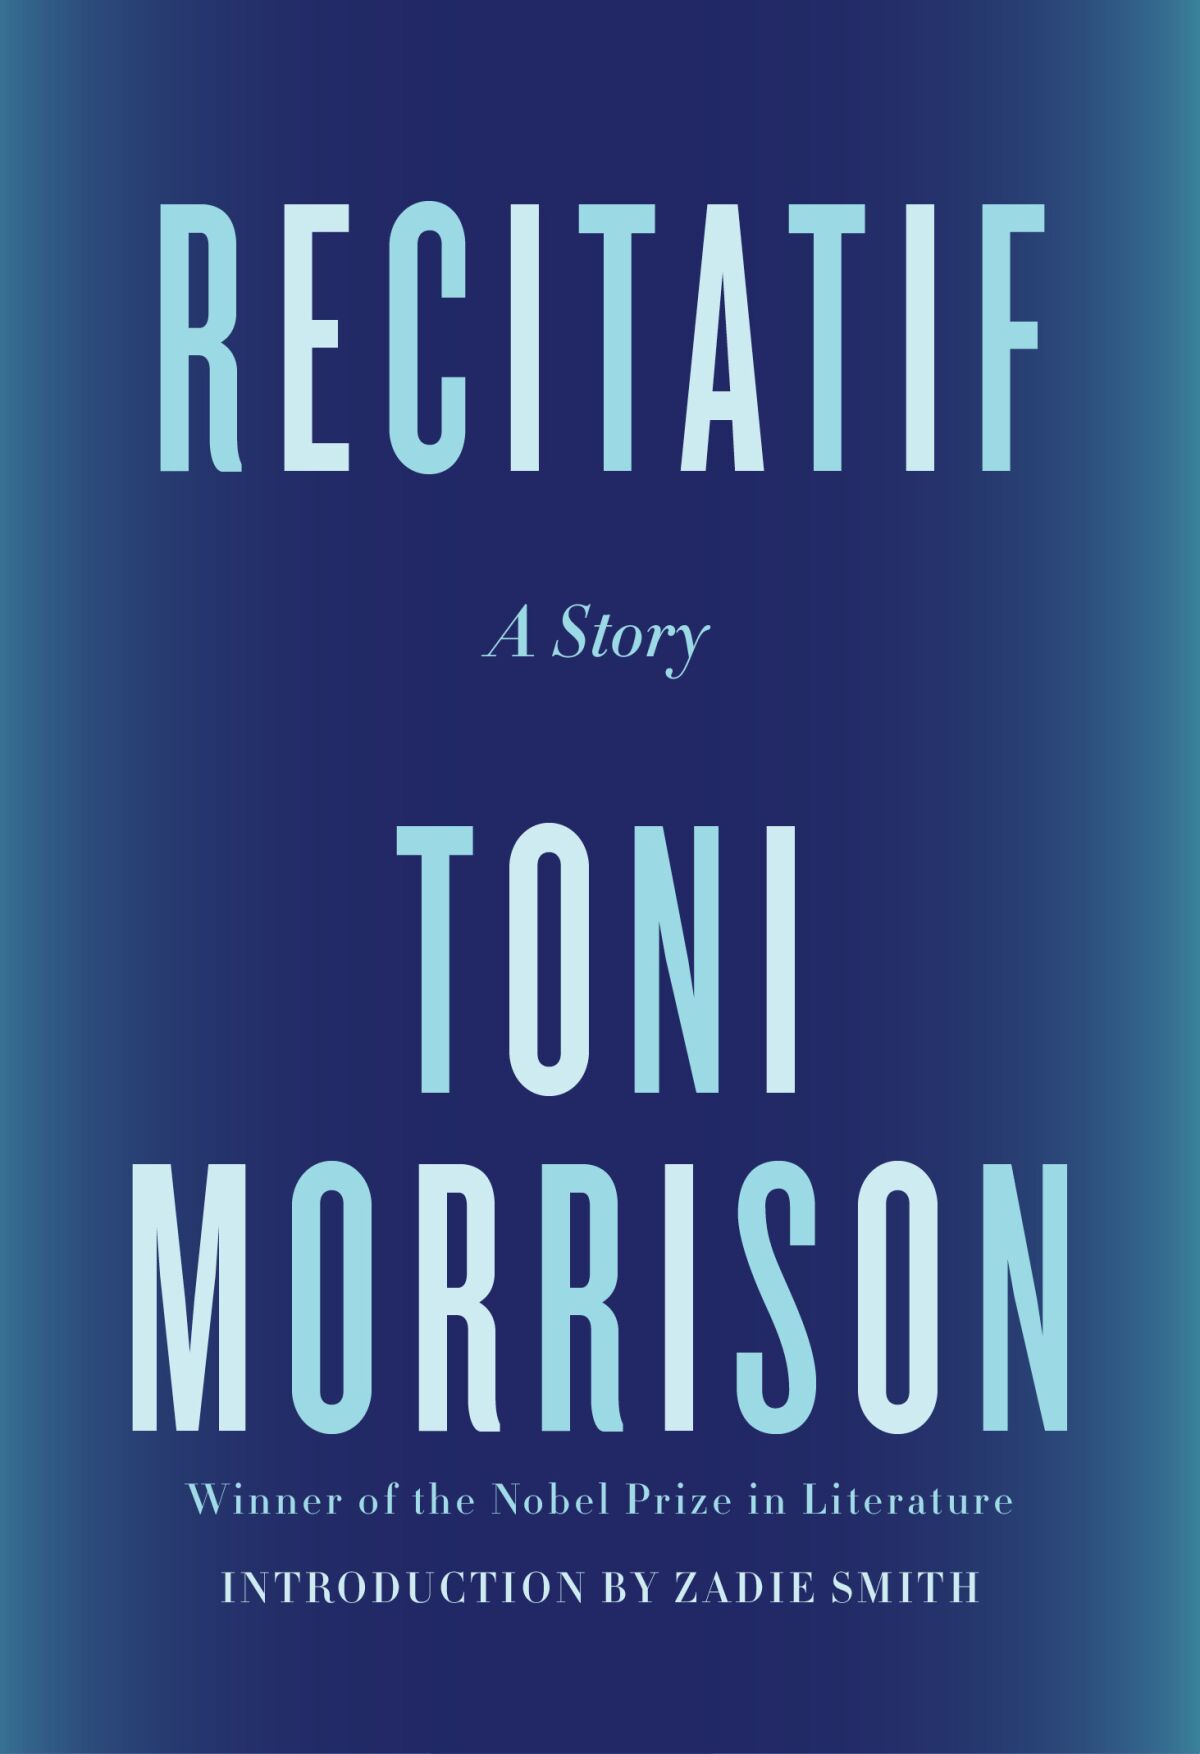 "Recitatif," by Toni Morrison